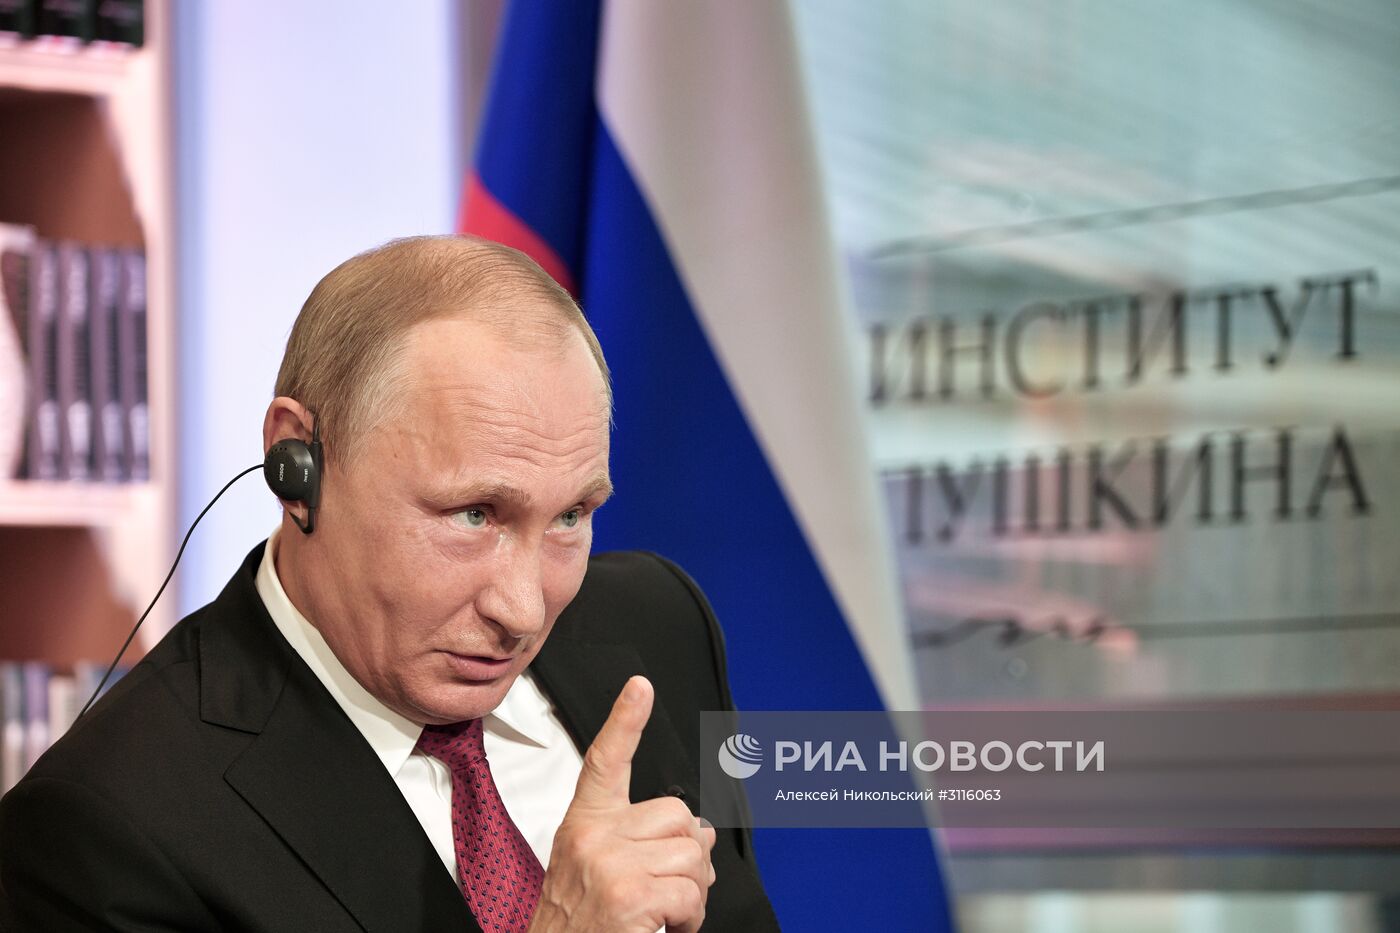 Президент РФ В. Путин дал интервью французскому изданию Le Figaro